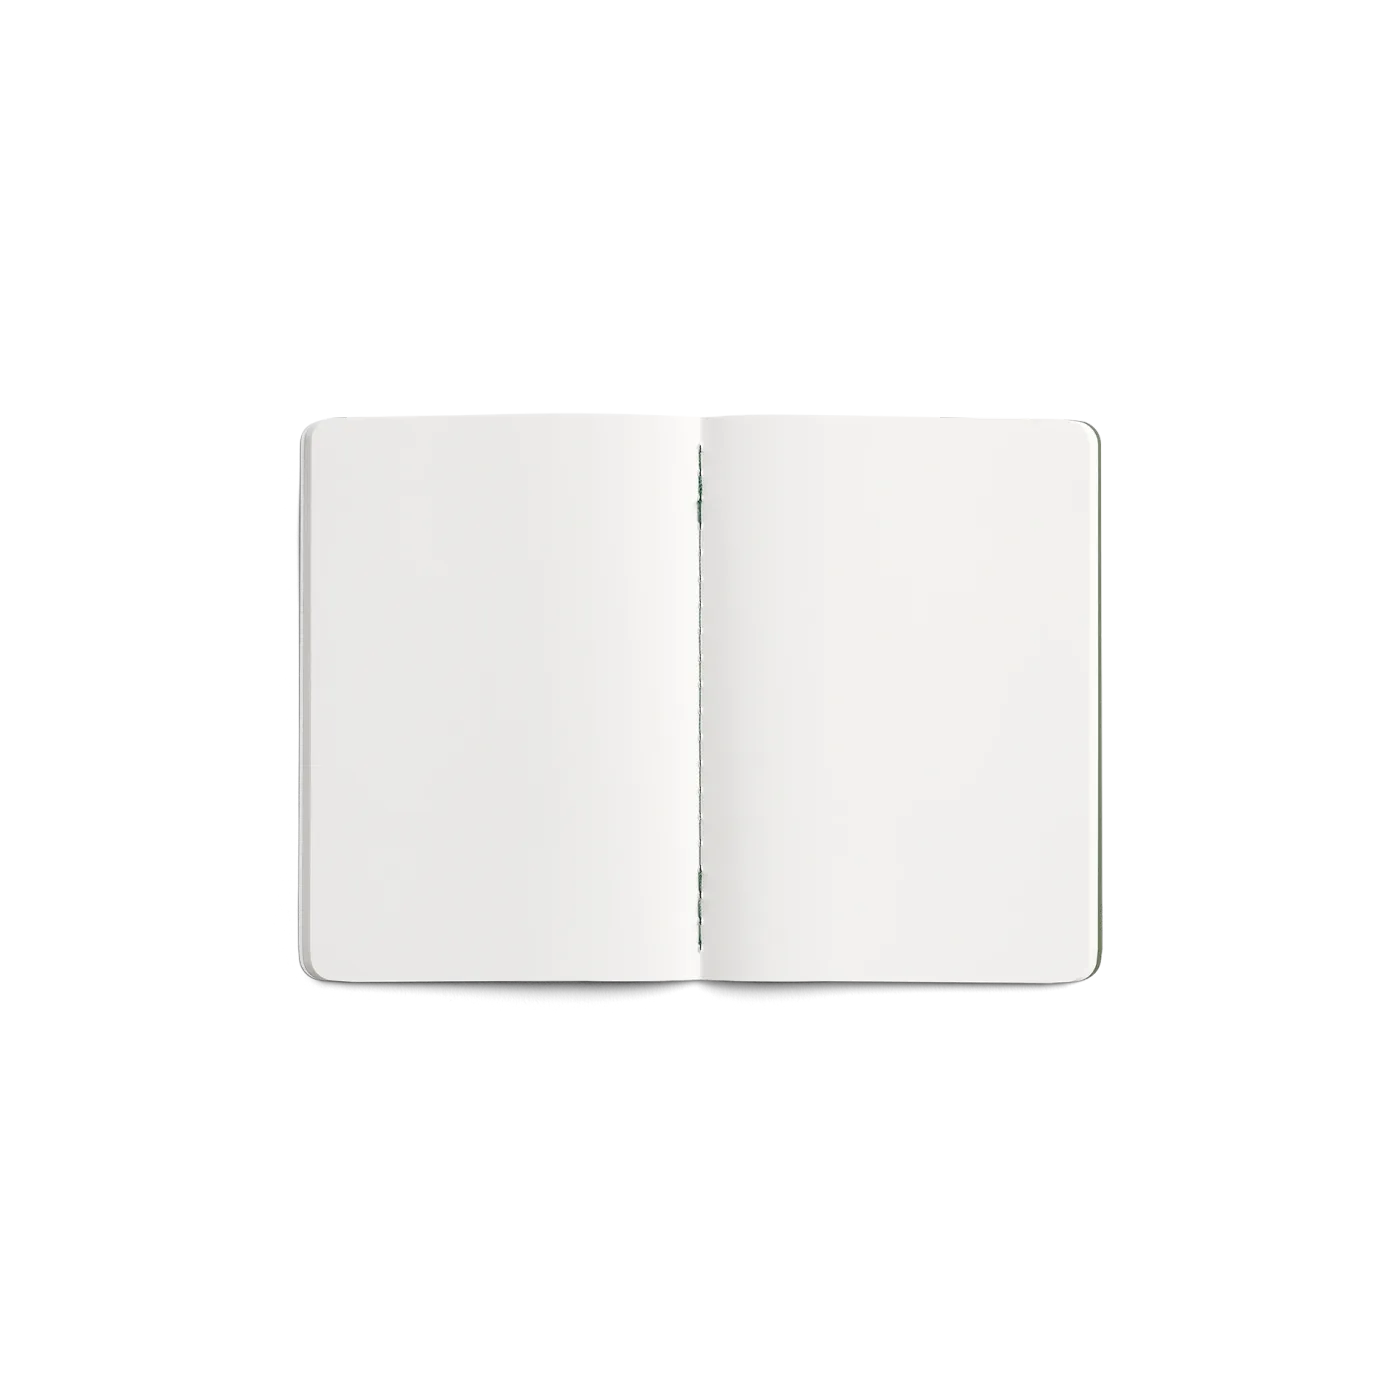 Karst Pocket Journal A6 – Tumeric (Blank)